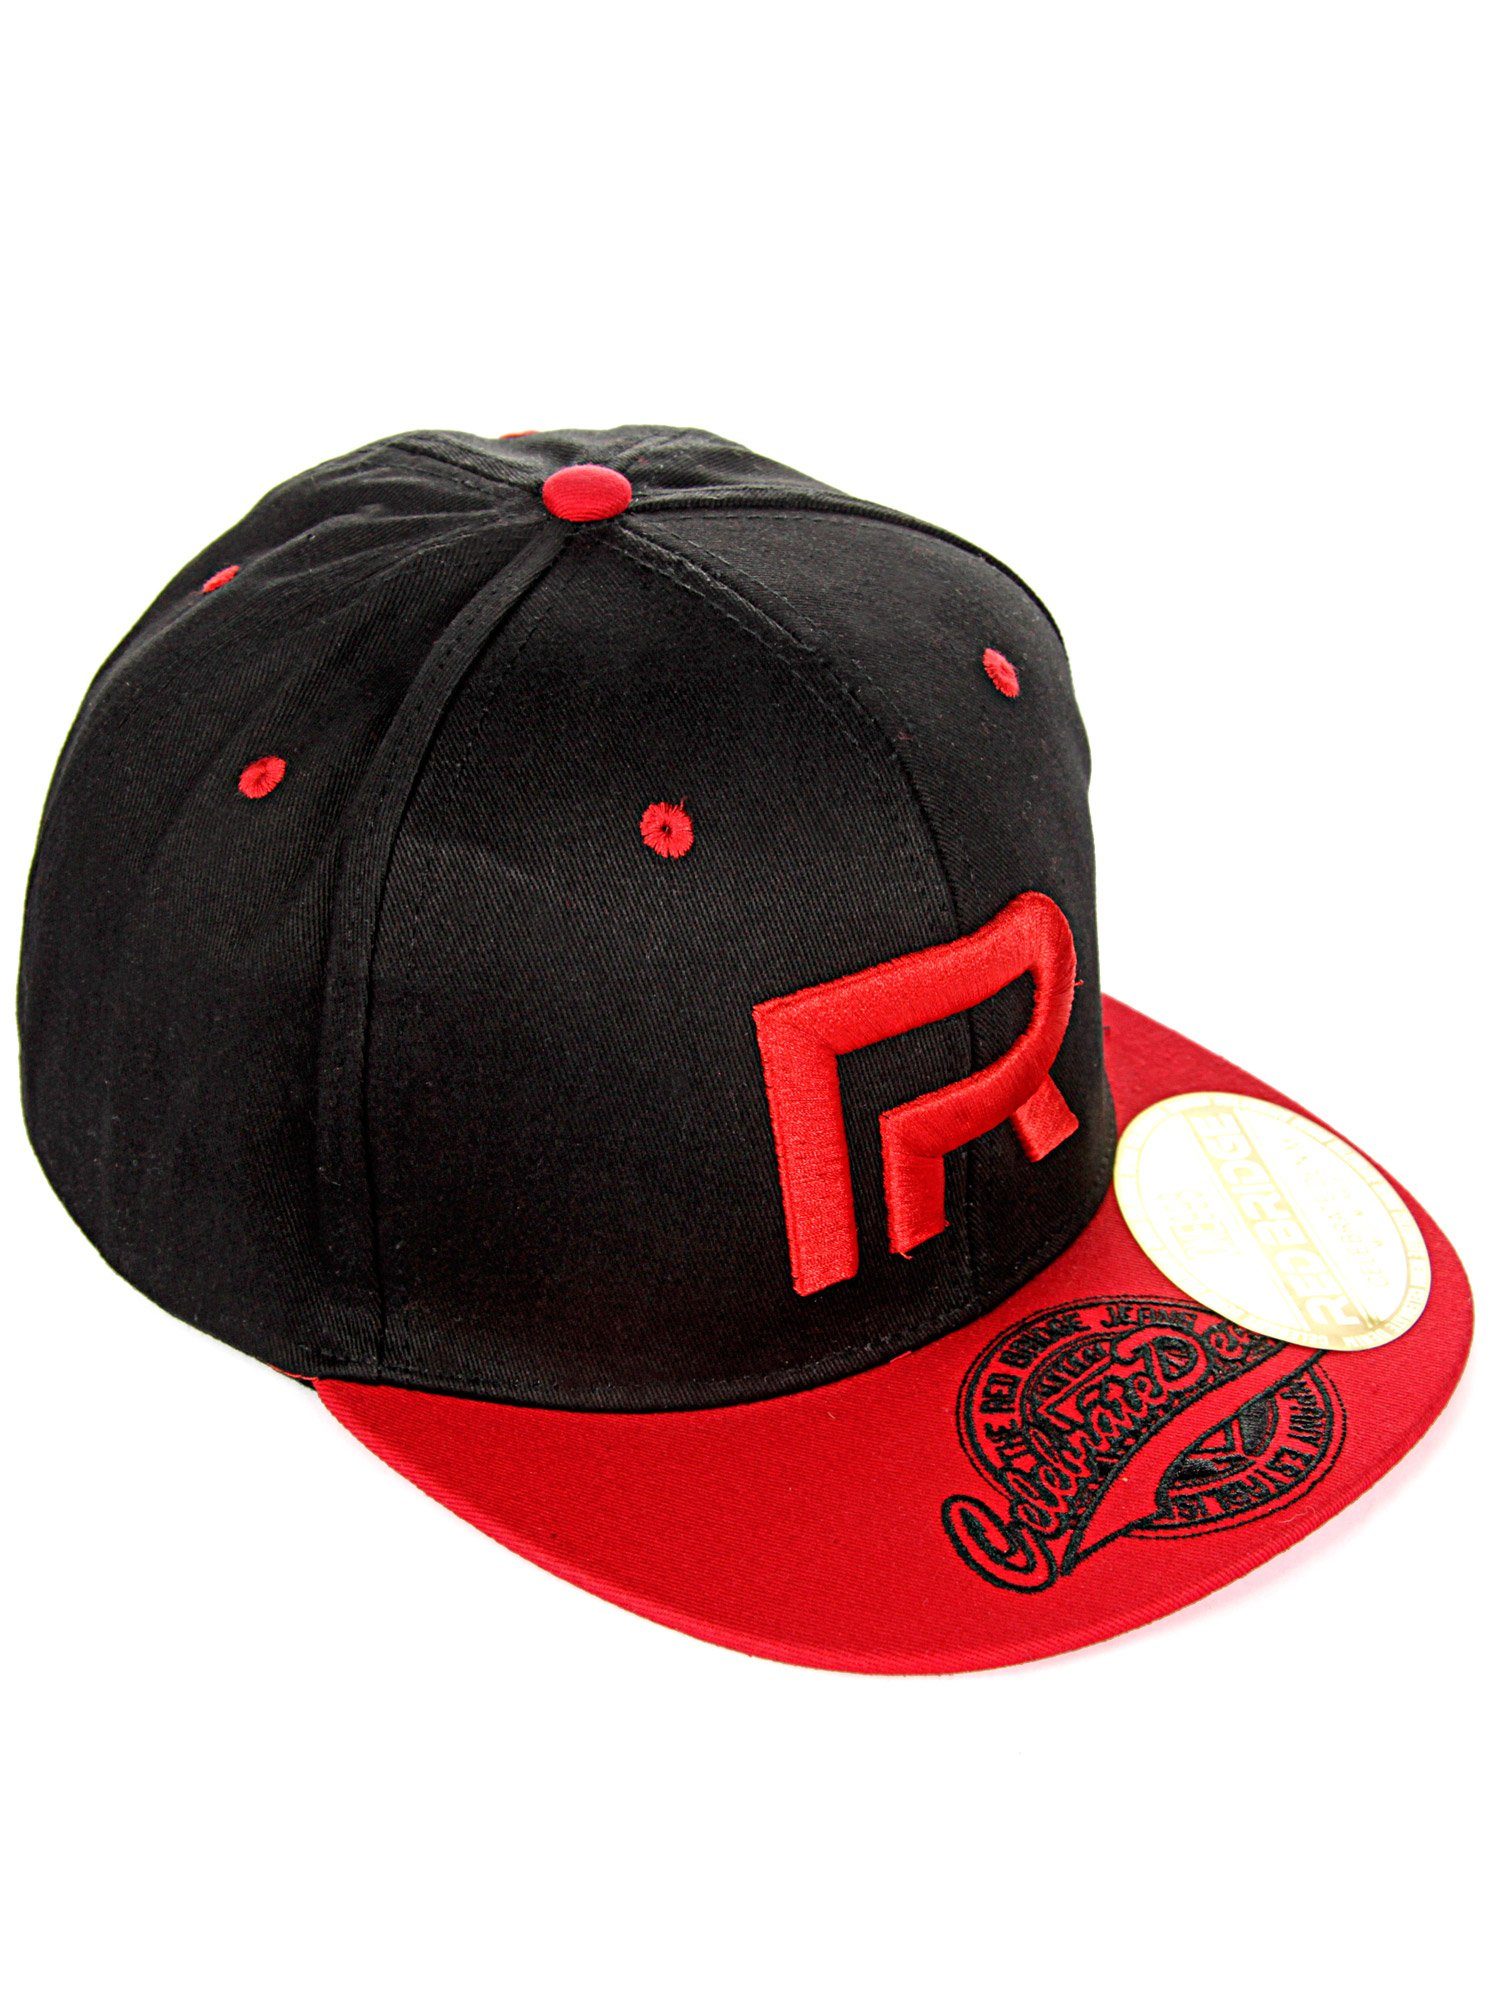 Wellingborough schwarz-rot Druckverschluss Baseball RedBridge Cap mit